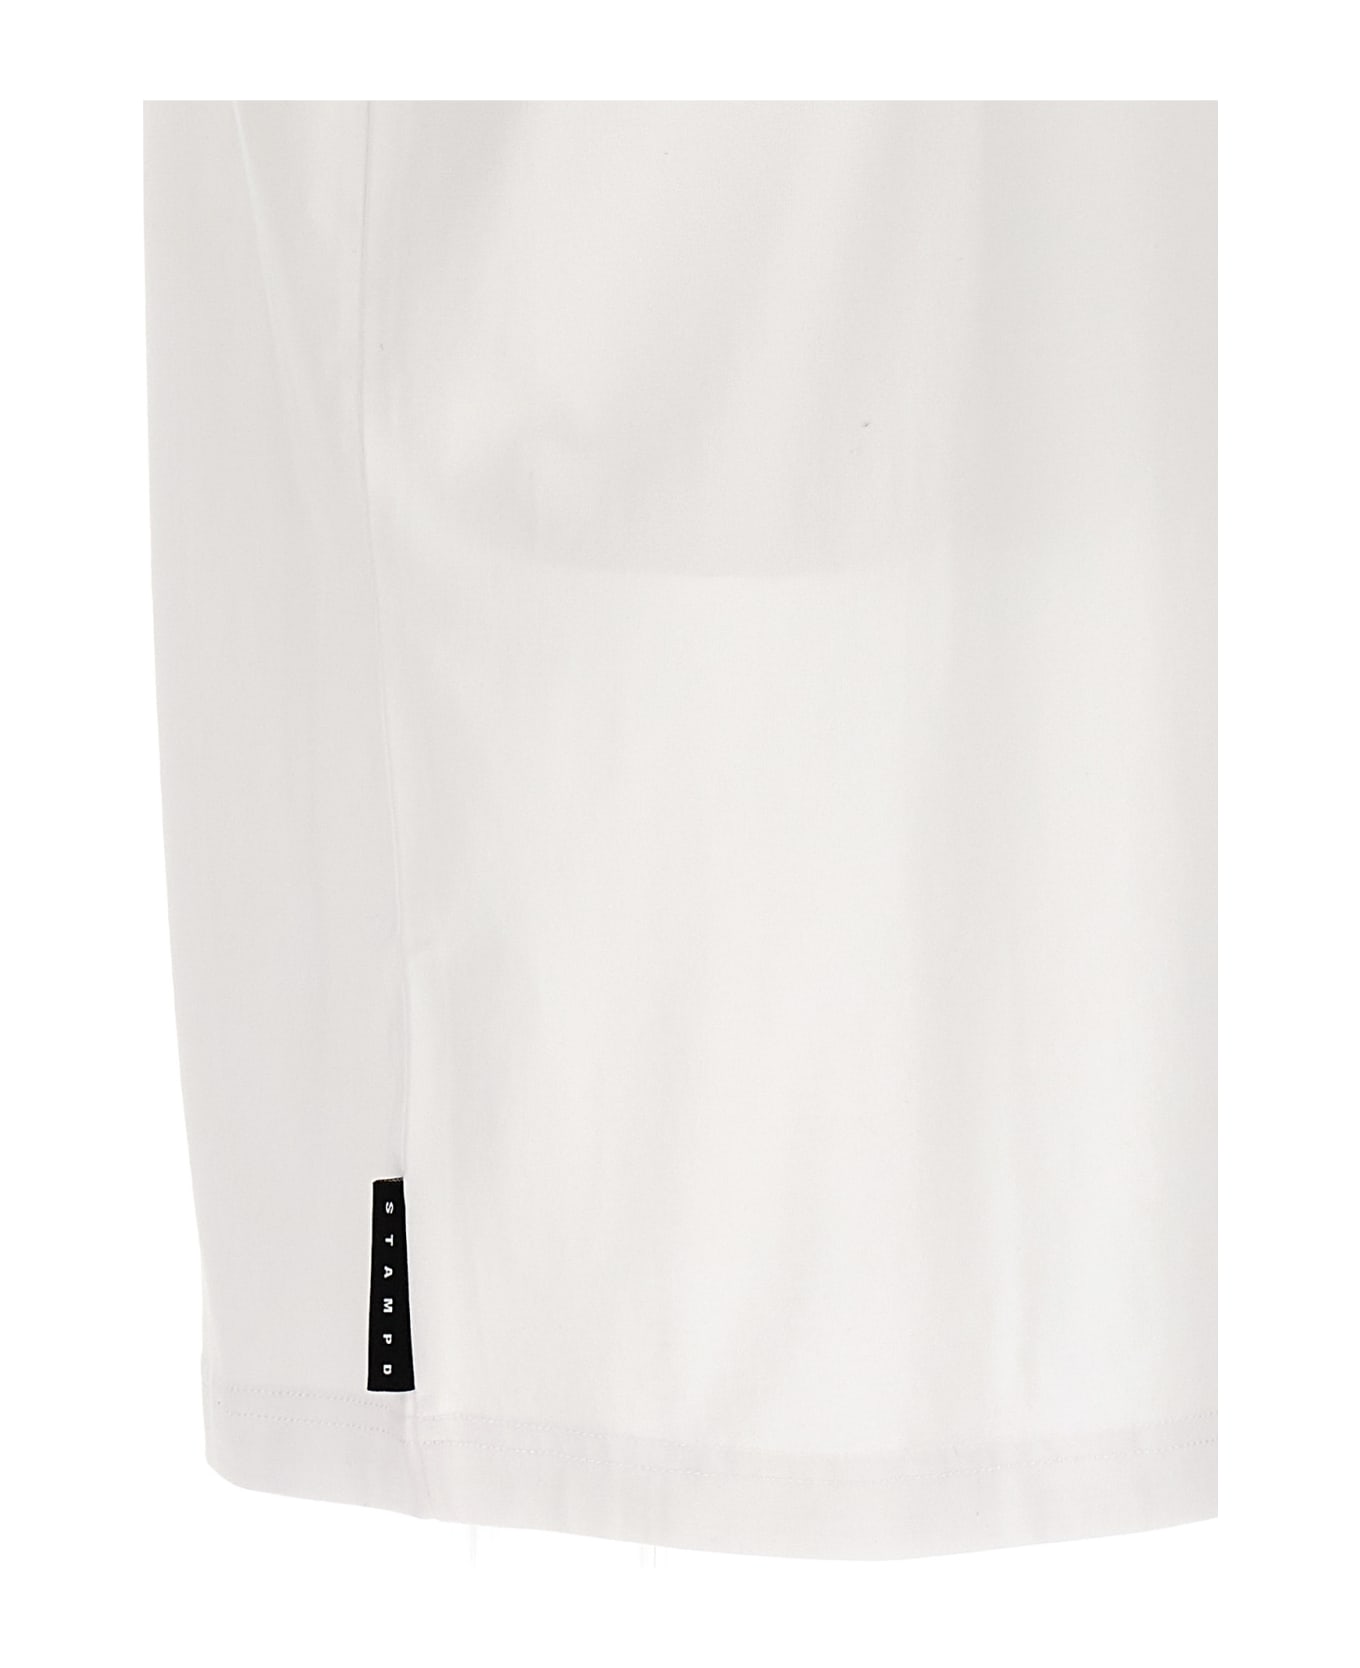 Stampd T-shirt 'stacked Logo' - White